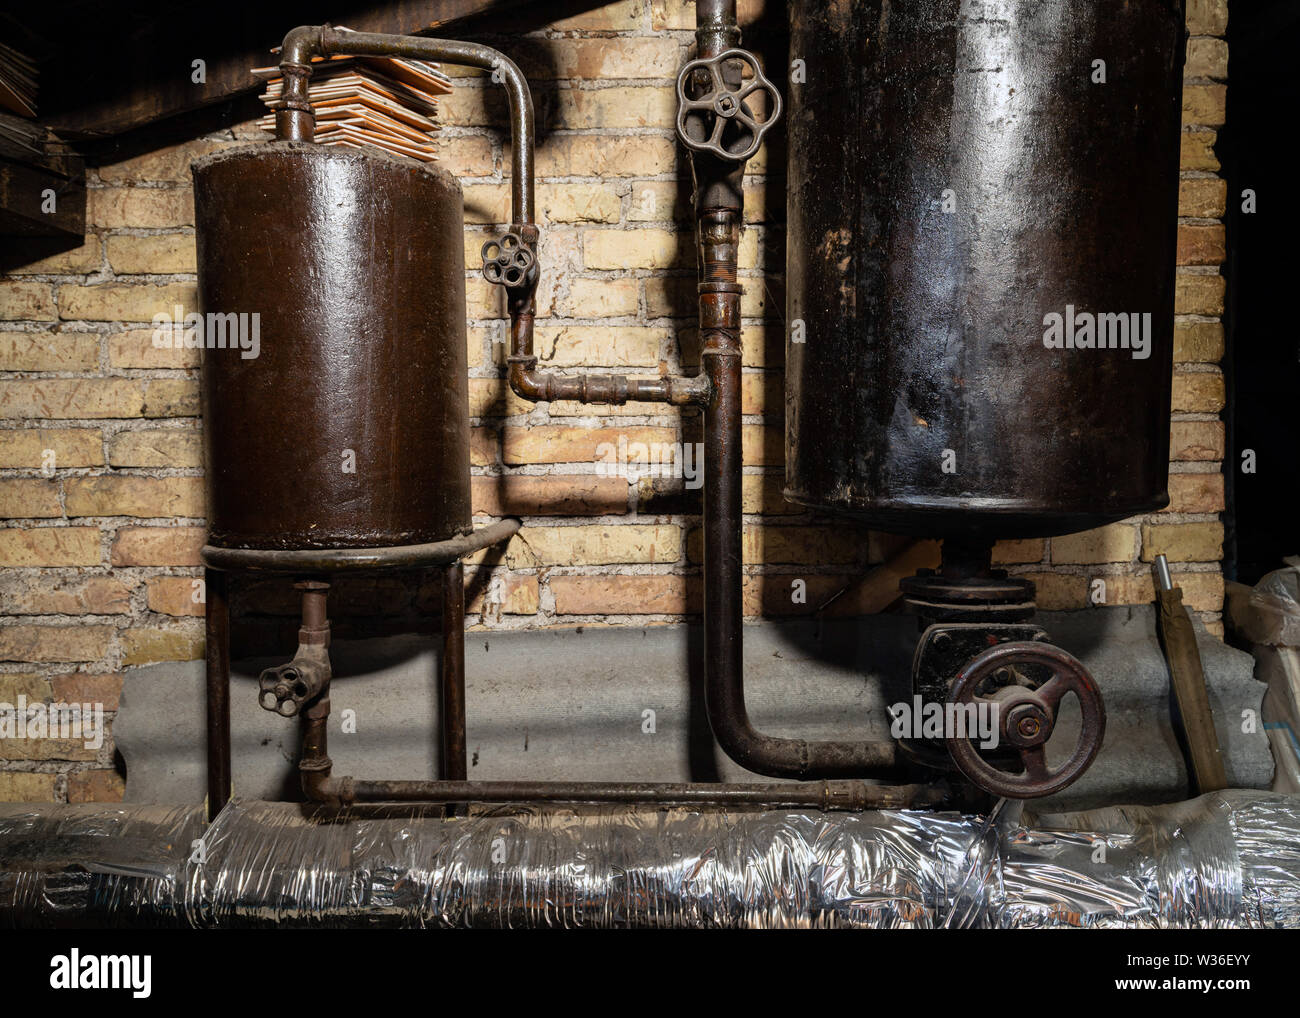 Rusty Boiler Room Pipes Old Metal Boiler Generating Heating And